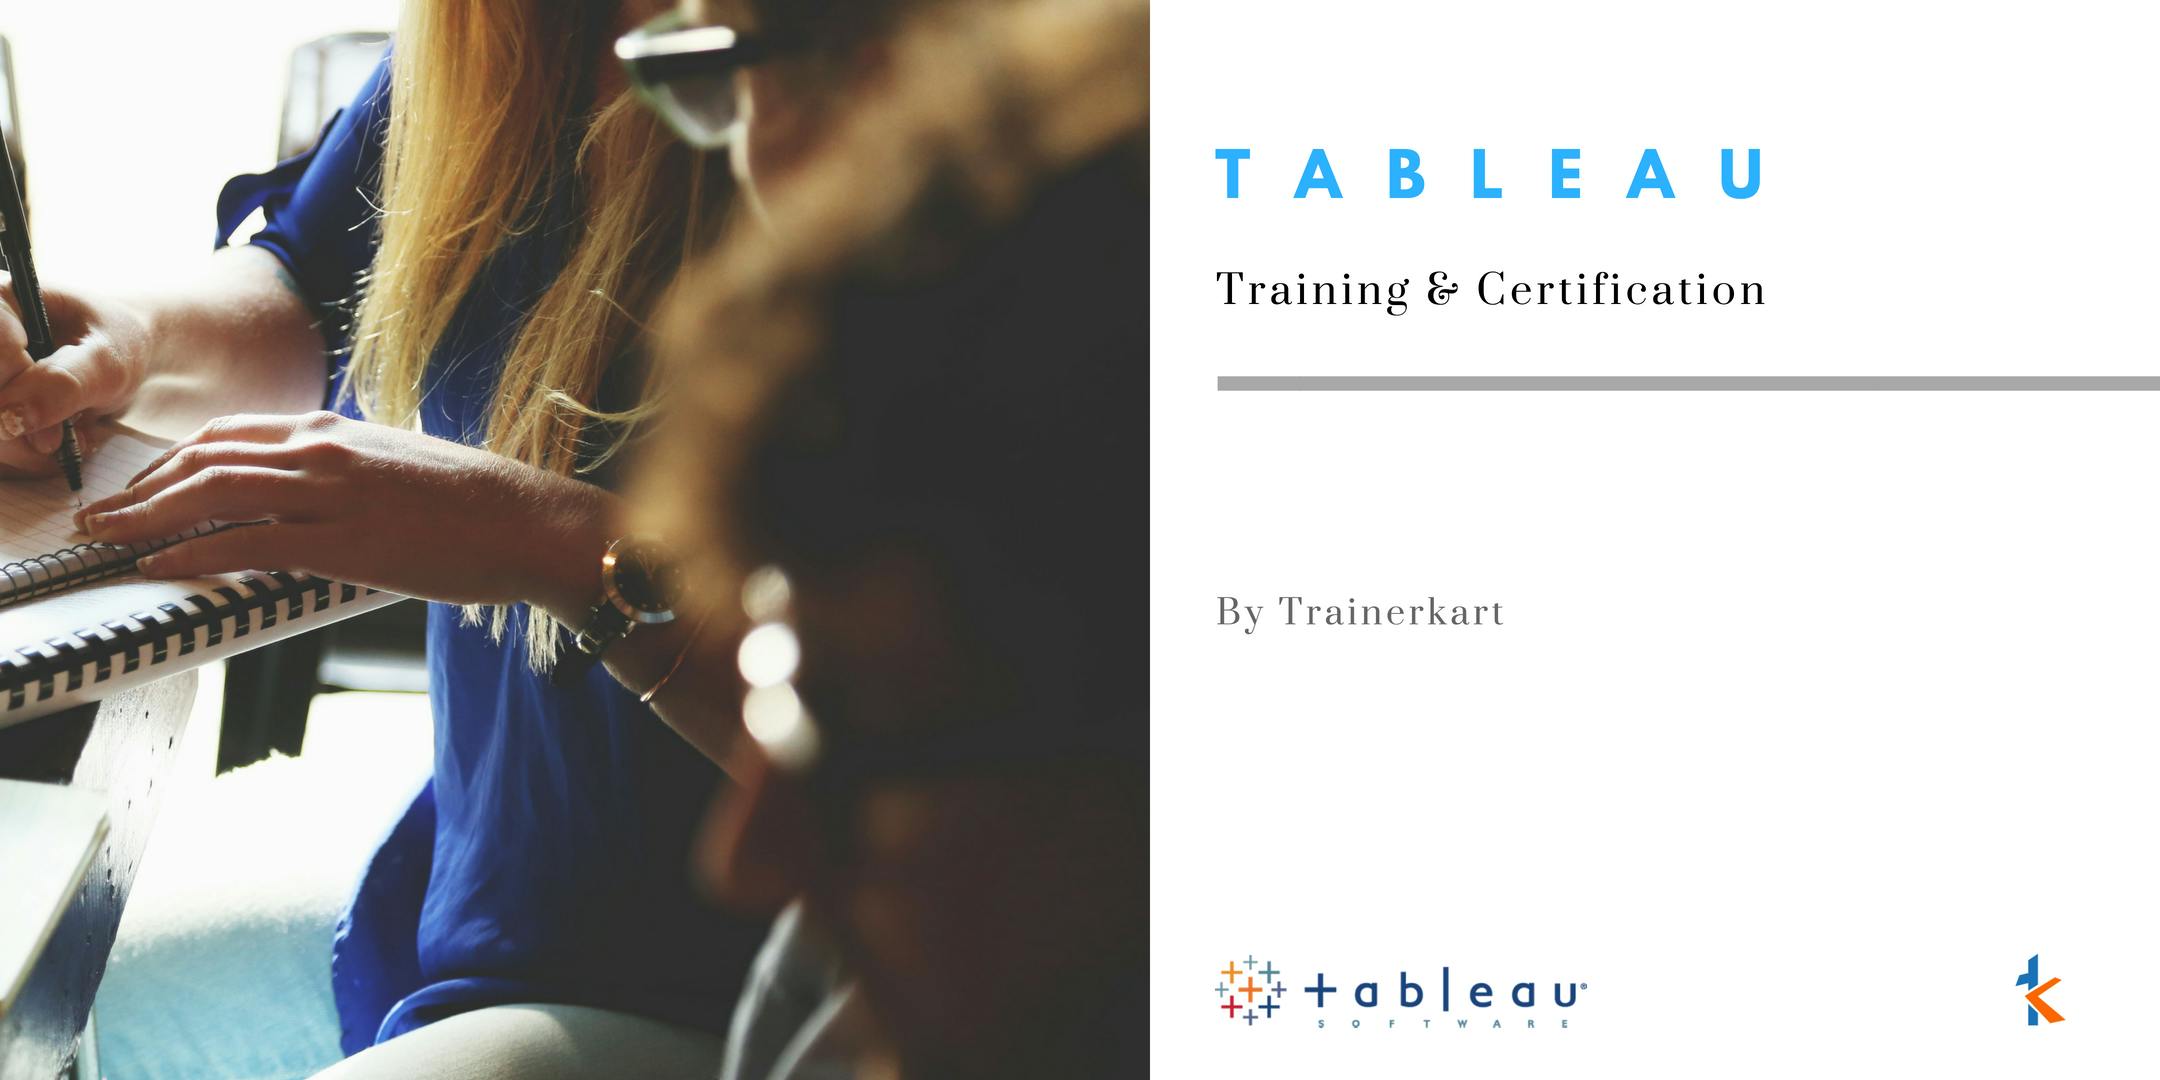 Tableau Training & Certification in Grand Rapids, MI